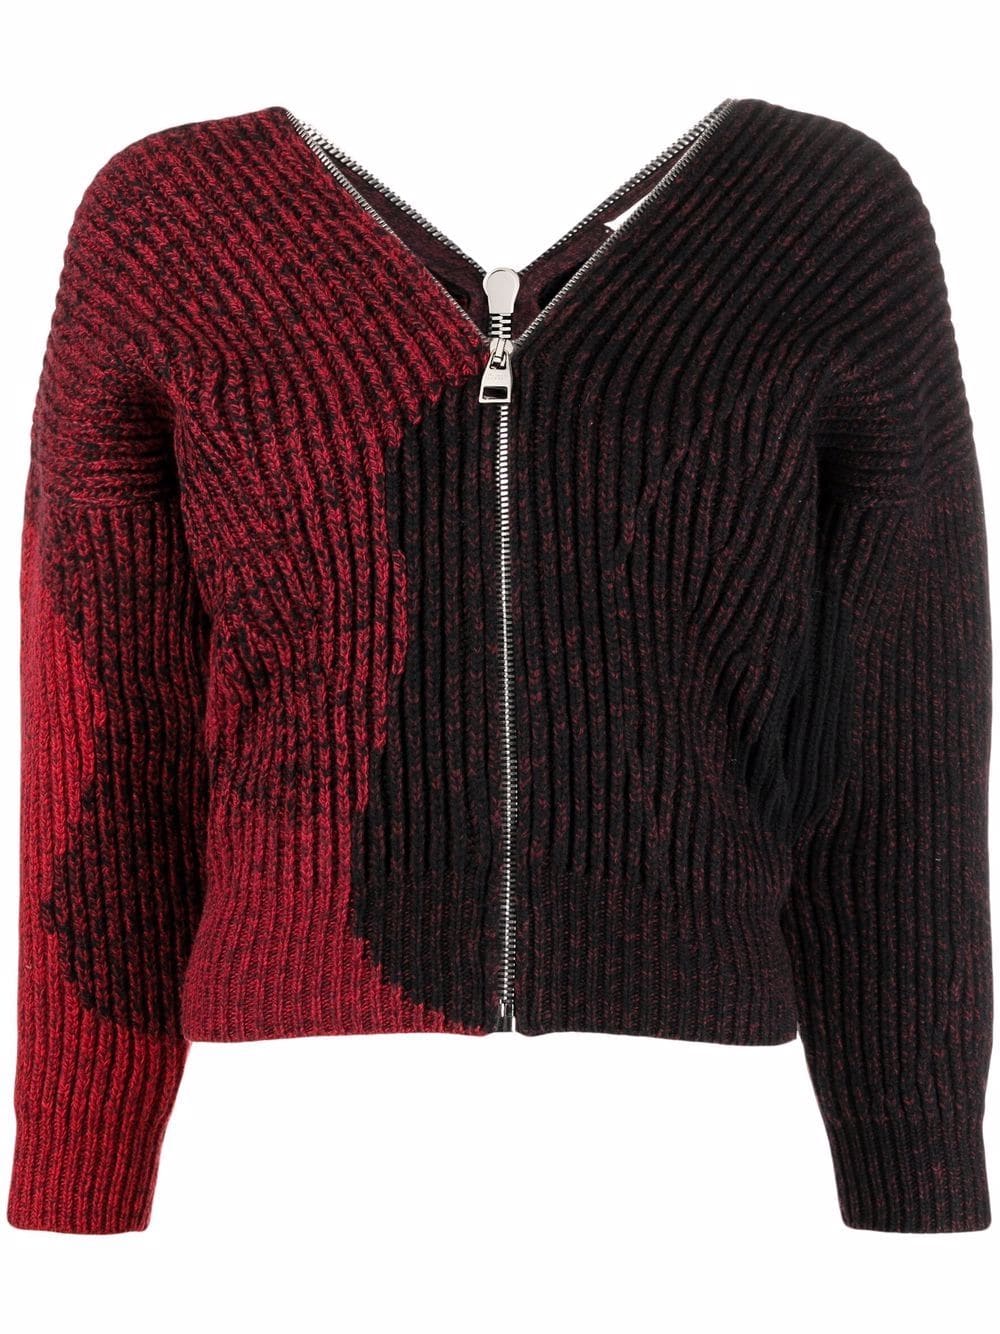 zipped-up V-neck sweater